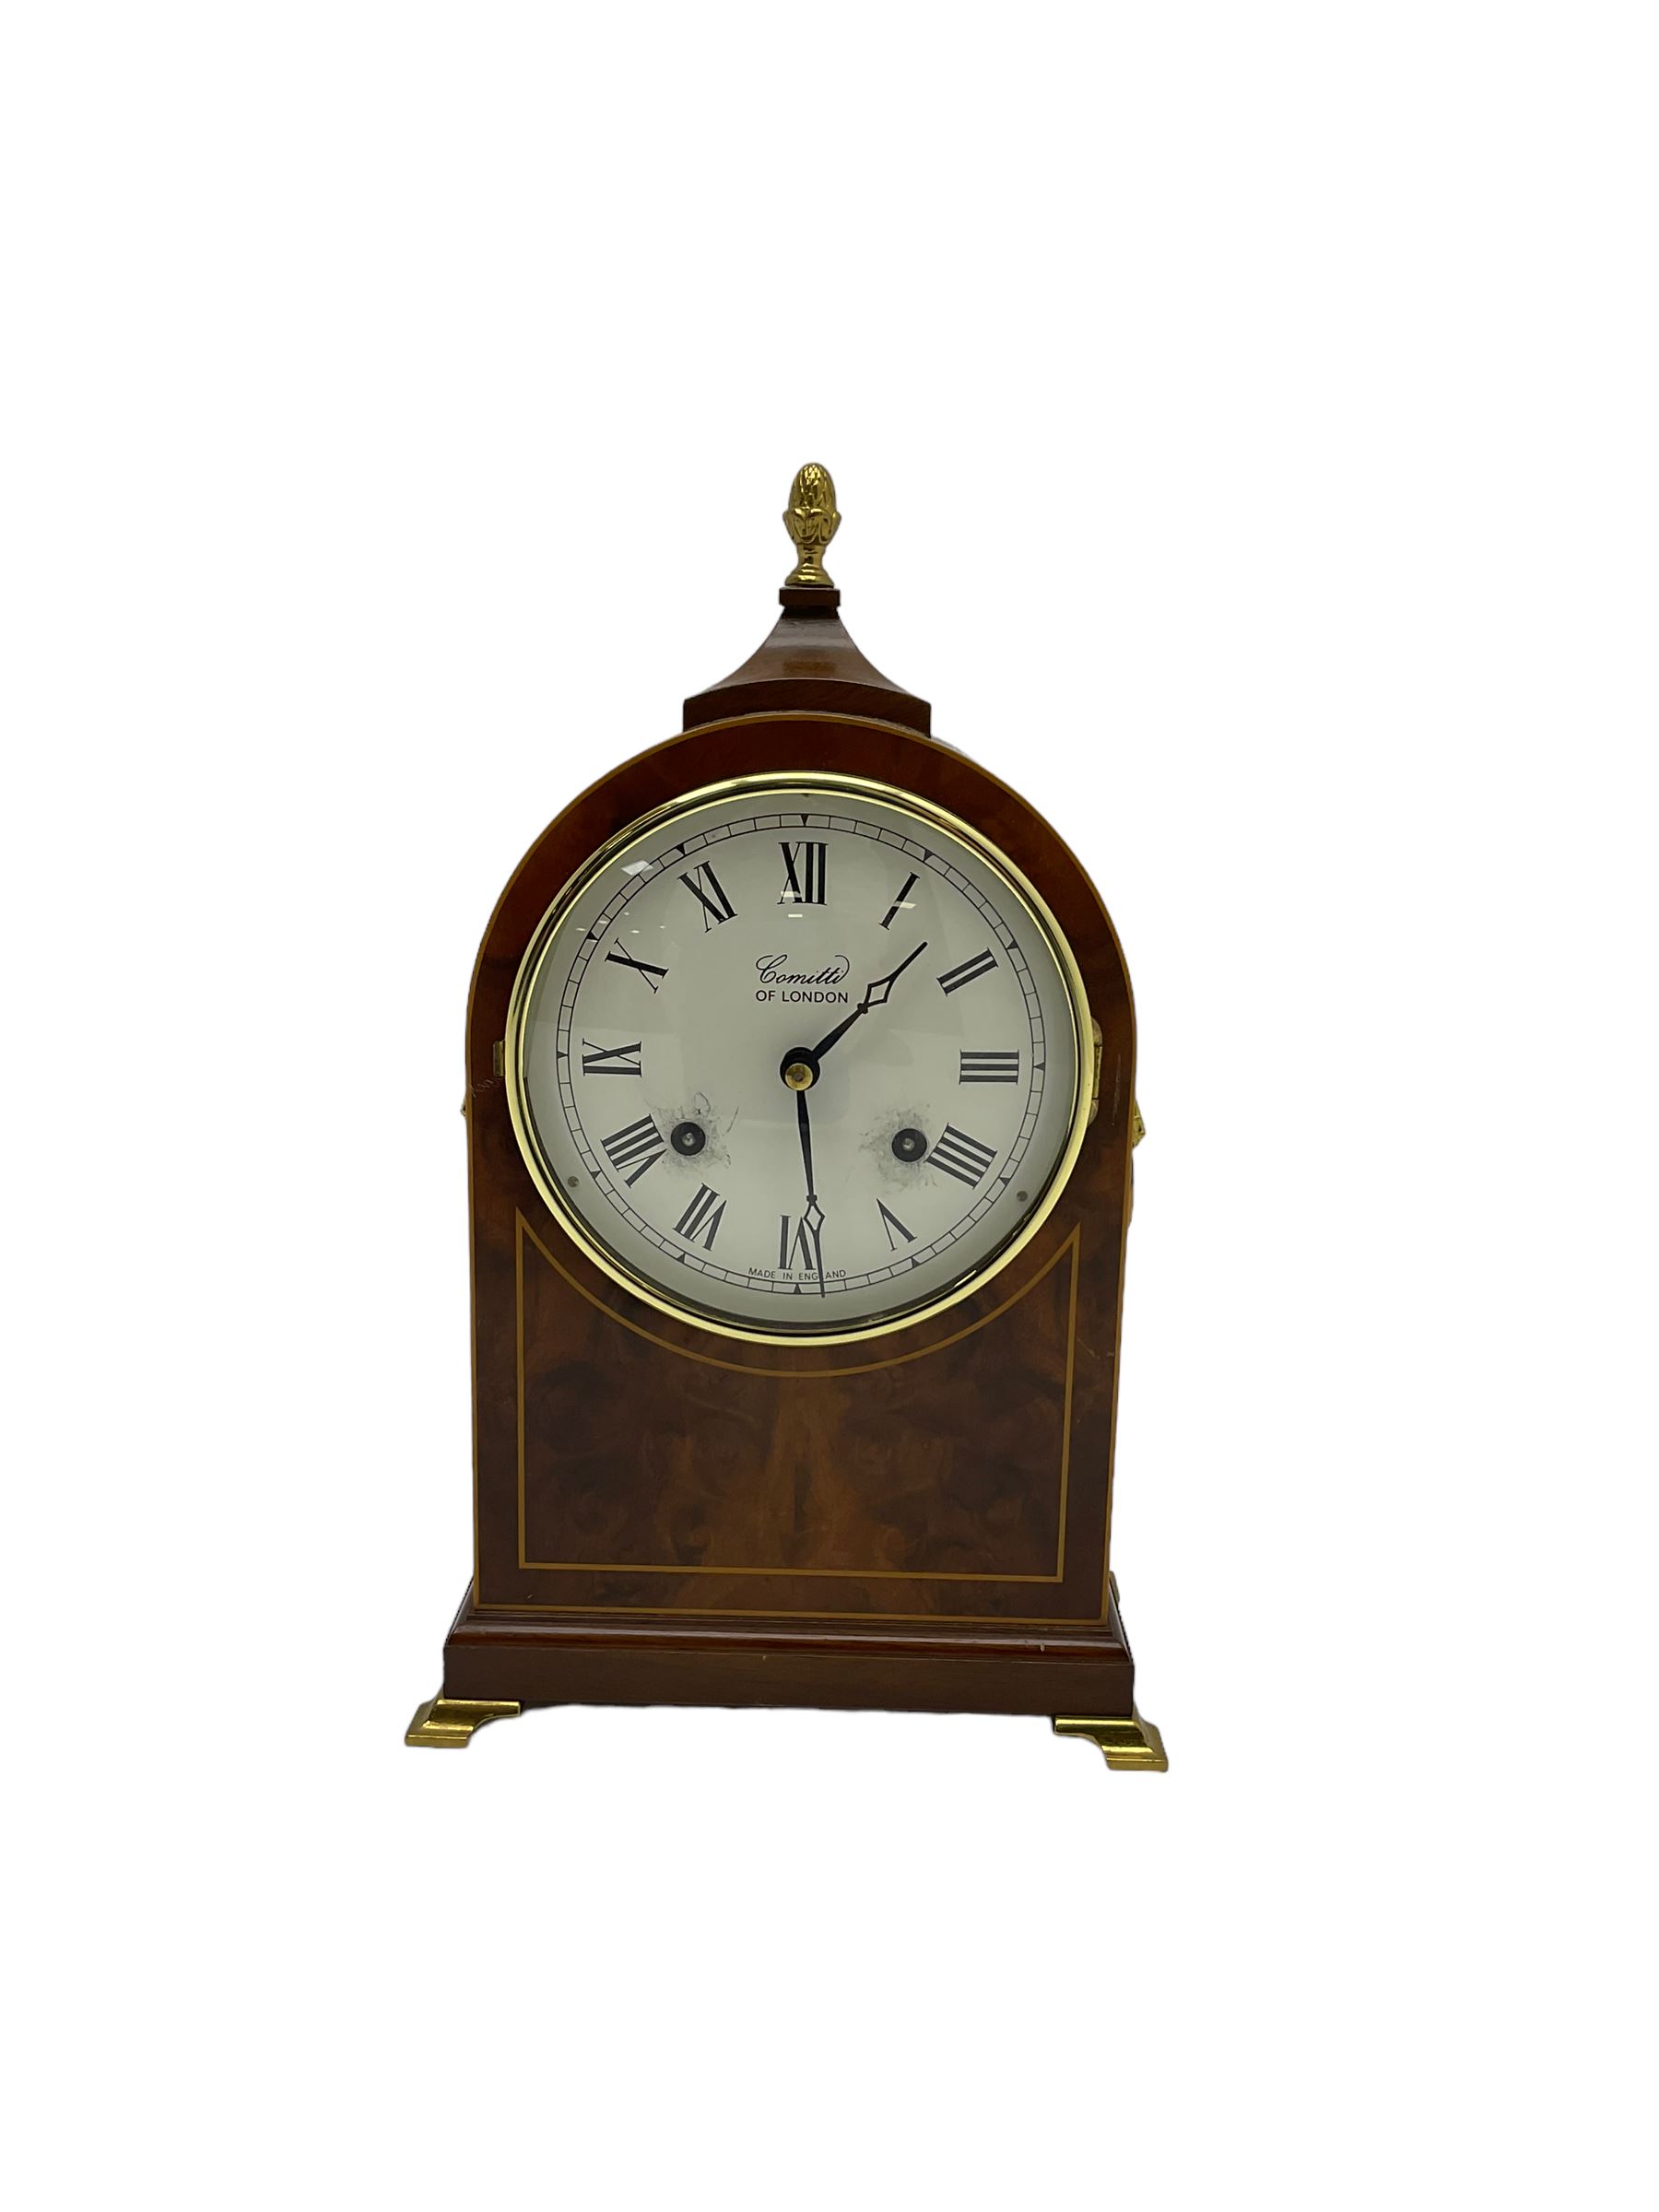 Comitti of London - 20th century 8-day mantle clock